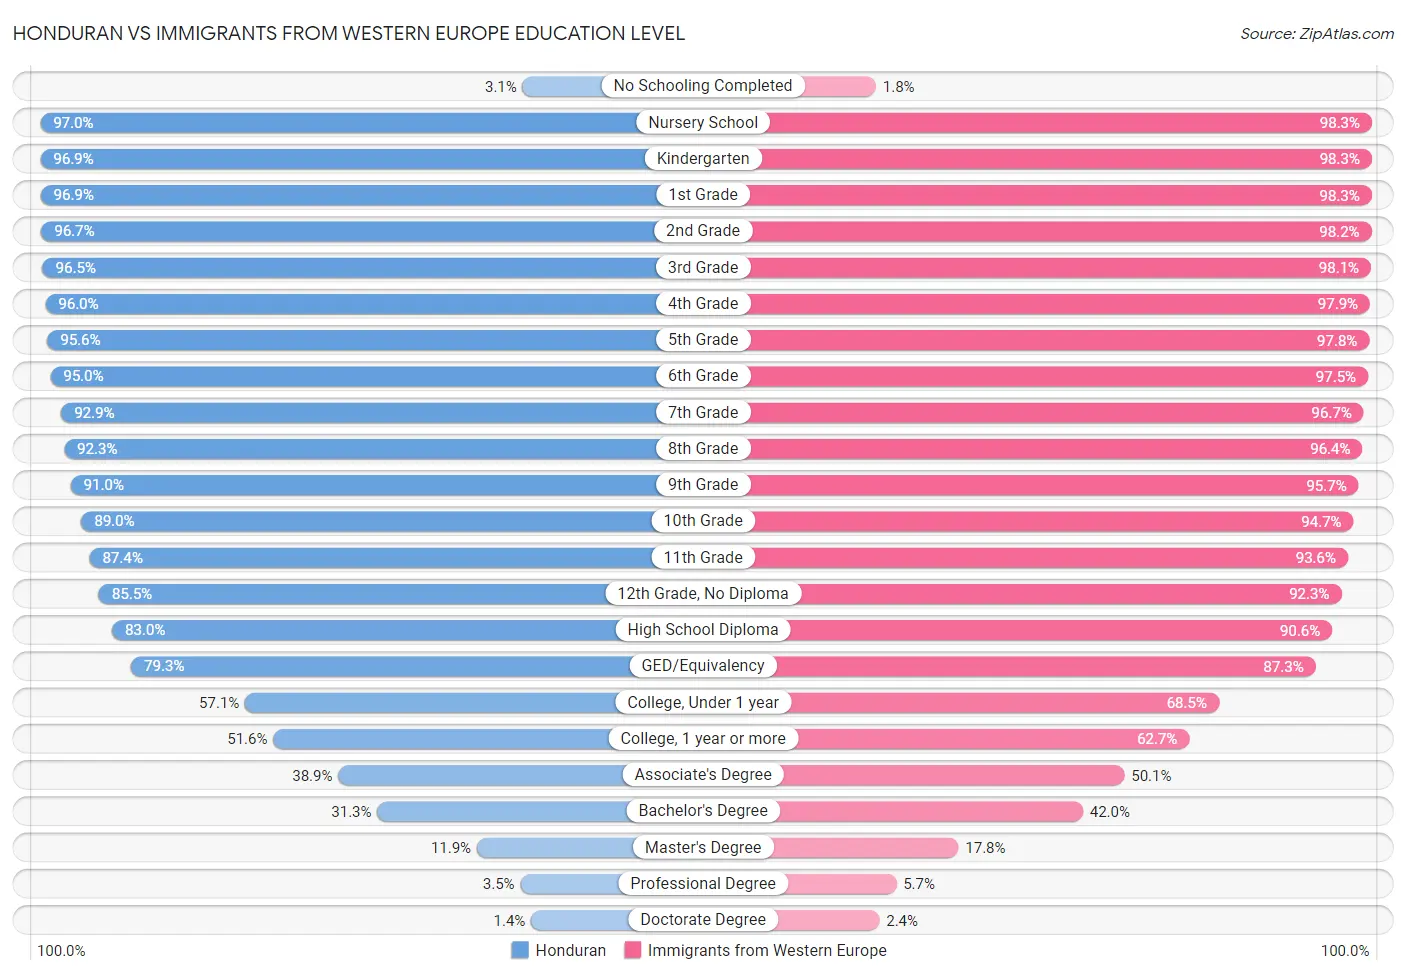 Honduran vs Immigrants from Western Europe Education Level